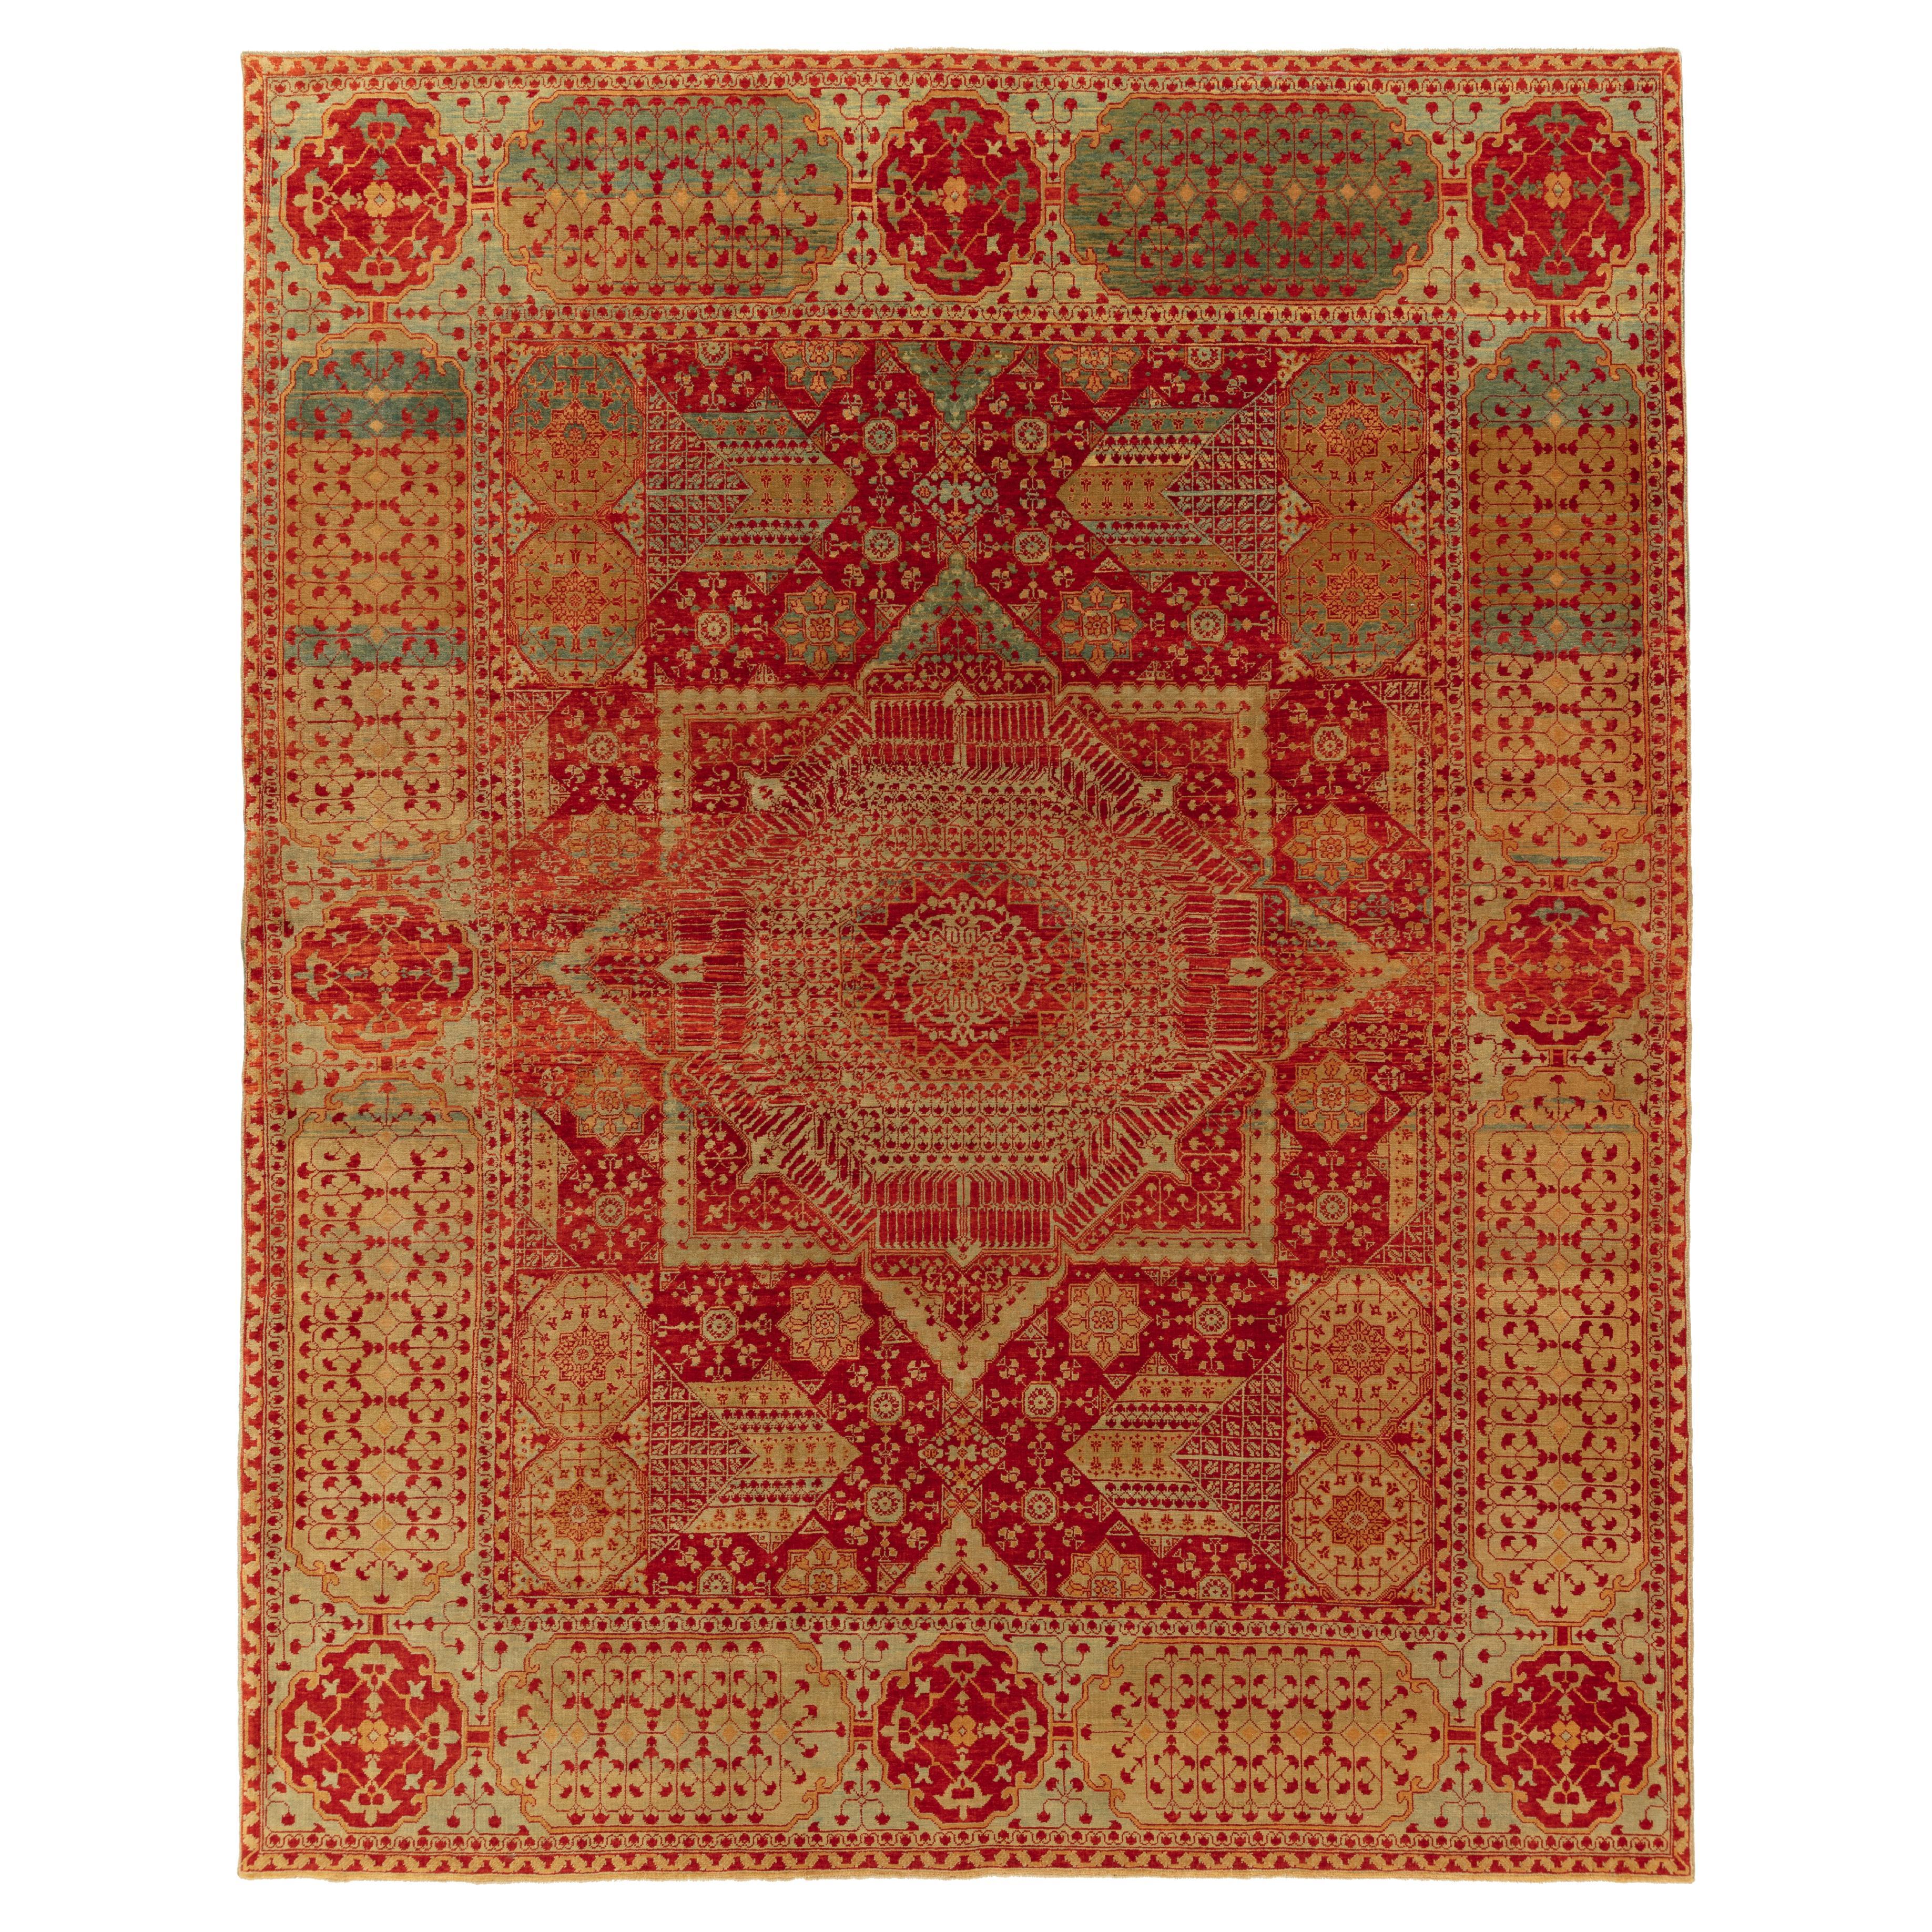 Ararat Rugs the Simonetti Mamluk Carpet 16th Century Revival Rug, Natural Dyed